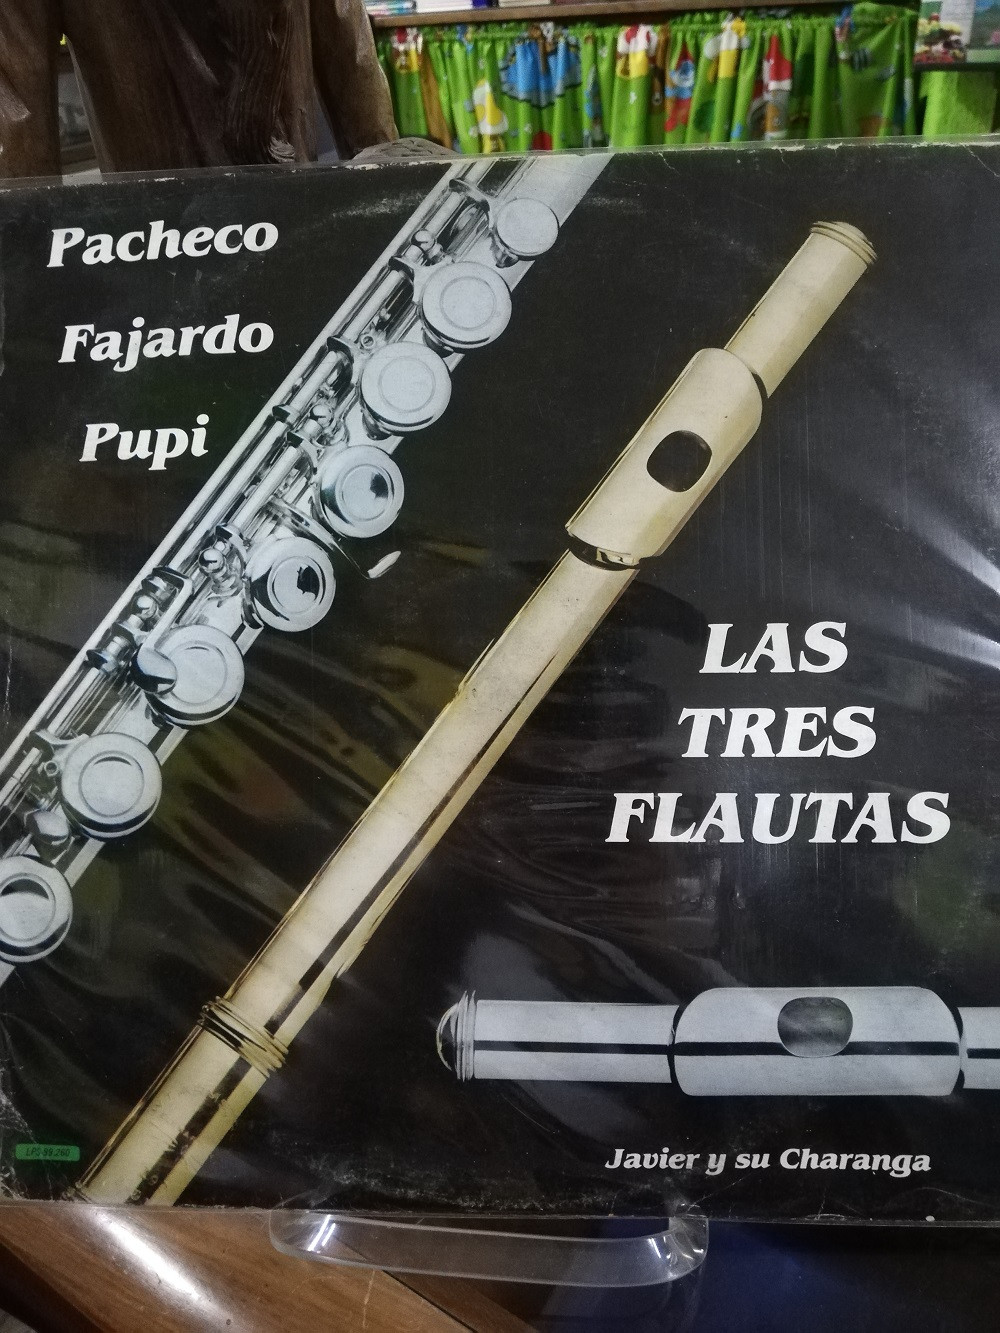 Lp Pacheco Fajardo Y Pupi Con Javier Y Su Charanga Las Tres Flautas